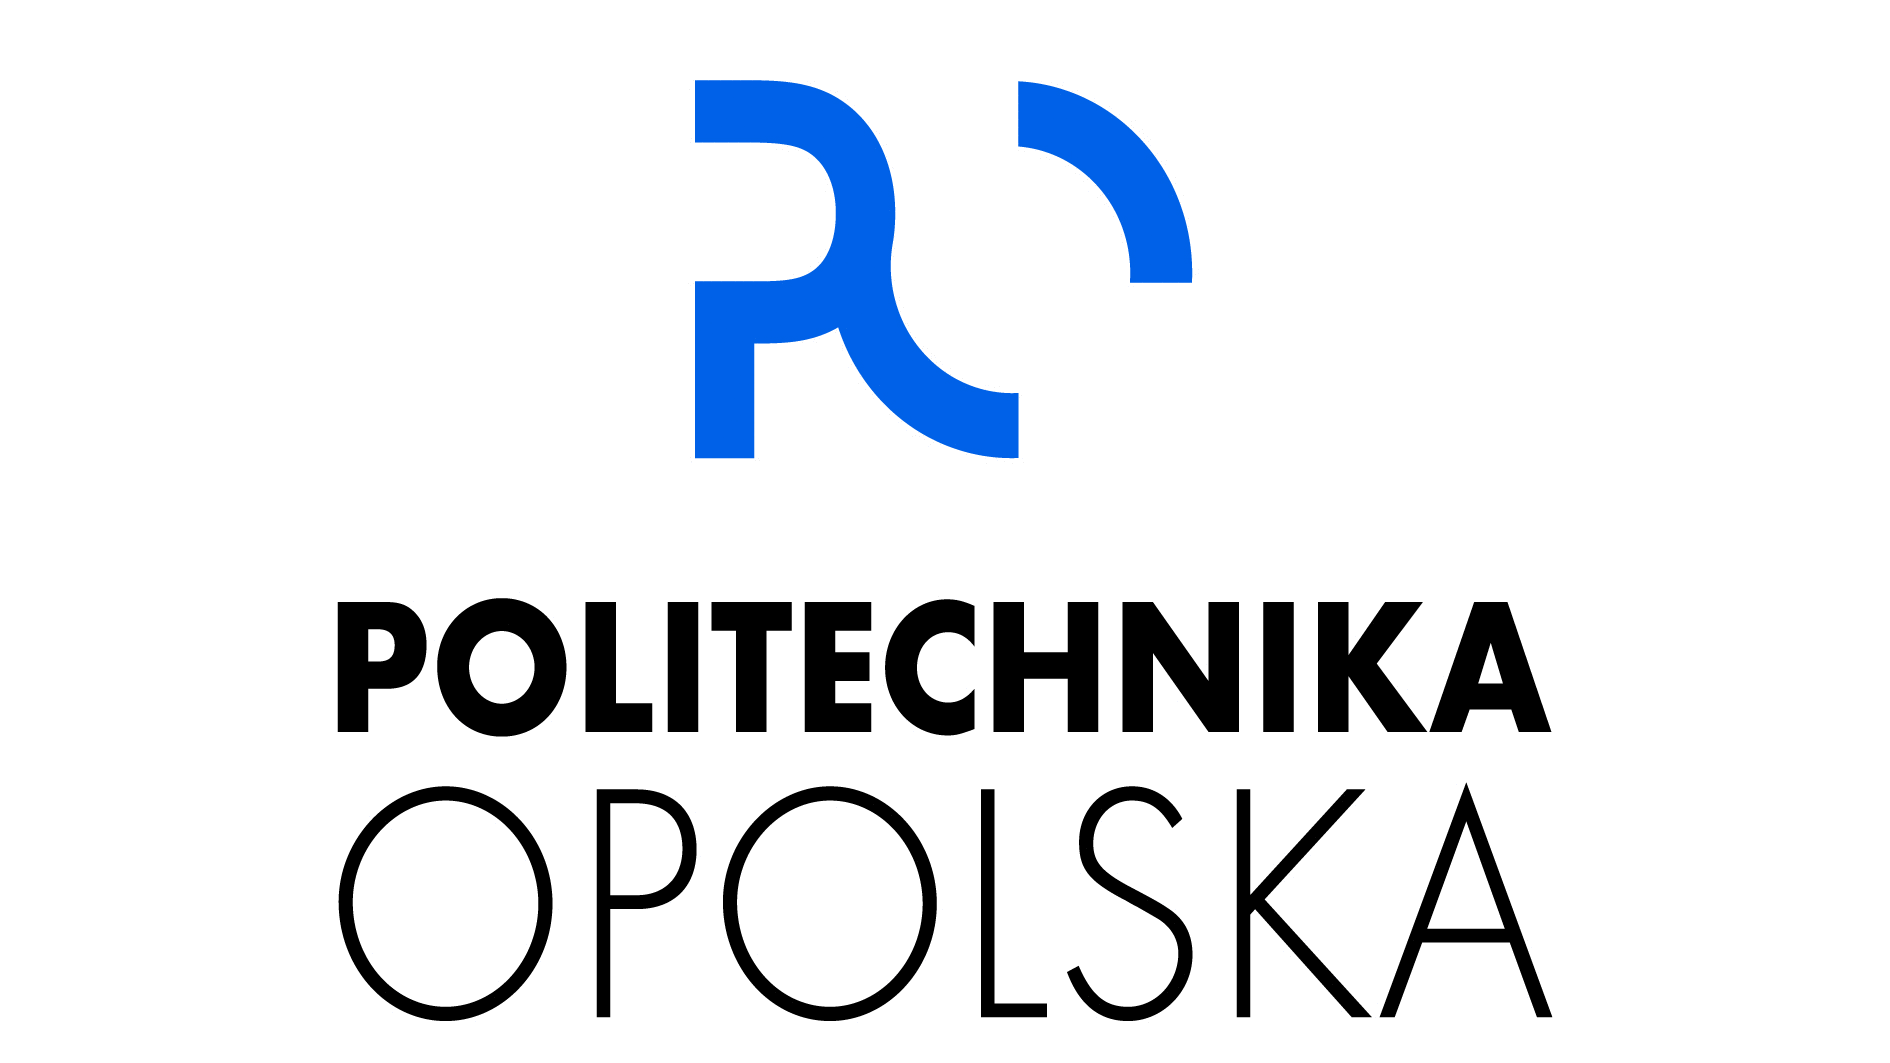 Politechnika Opolska (PO) logo